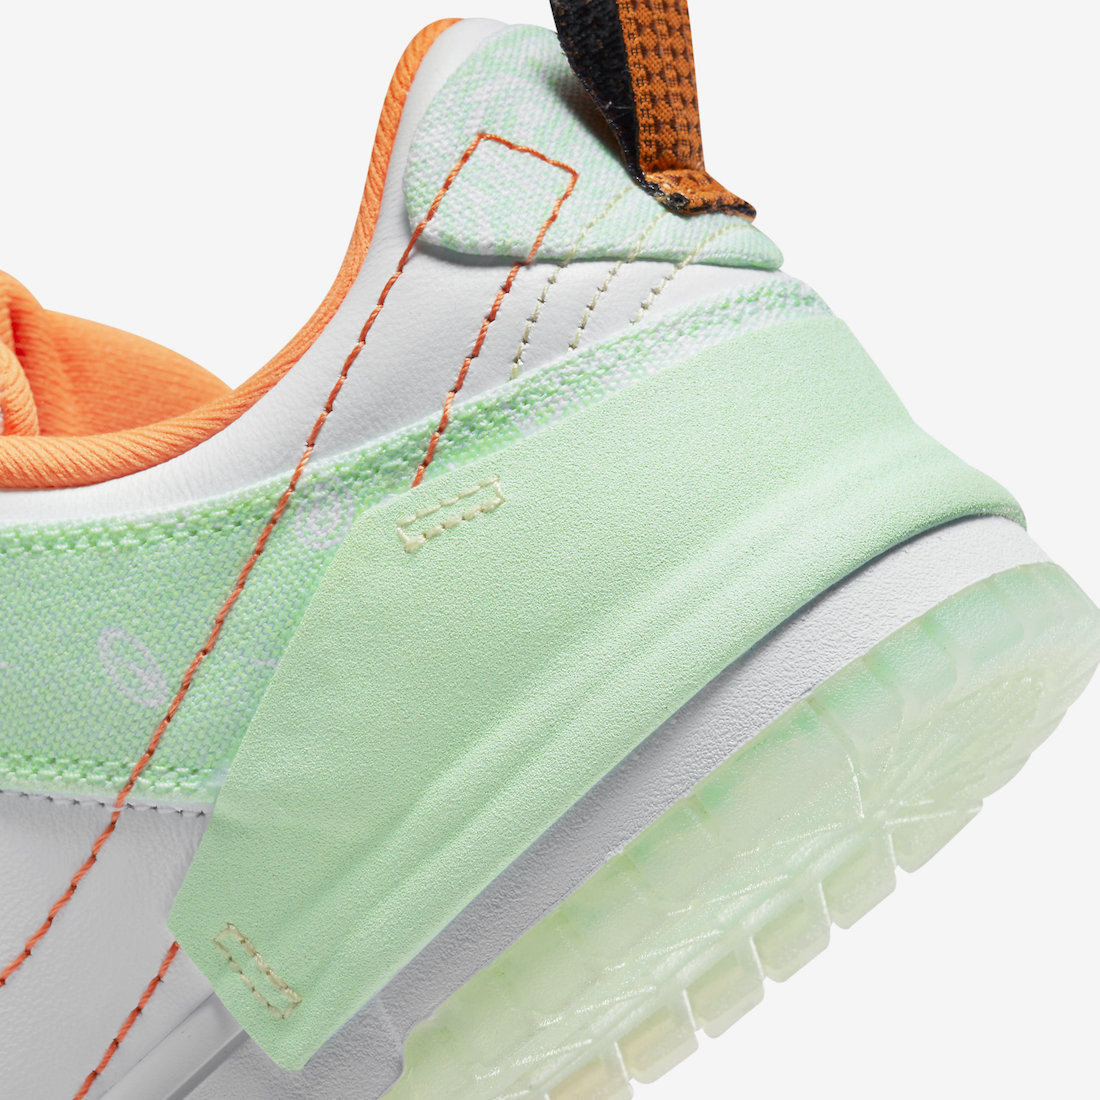 Nike Dunk Low Disrupt 2 Jade Ice Total Orange Release Date Info